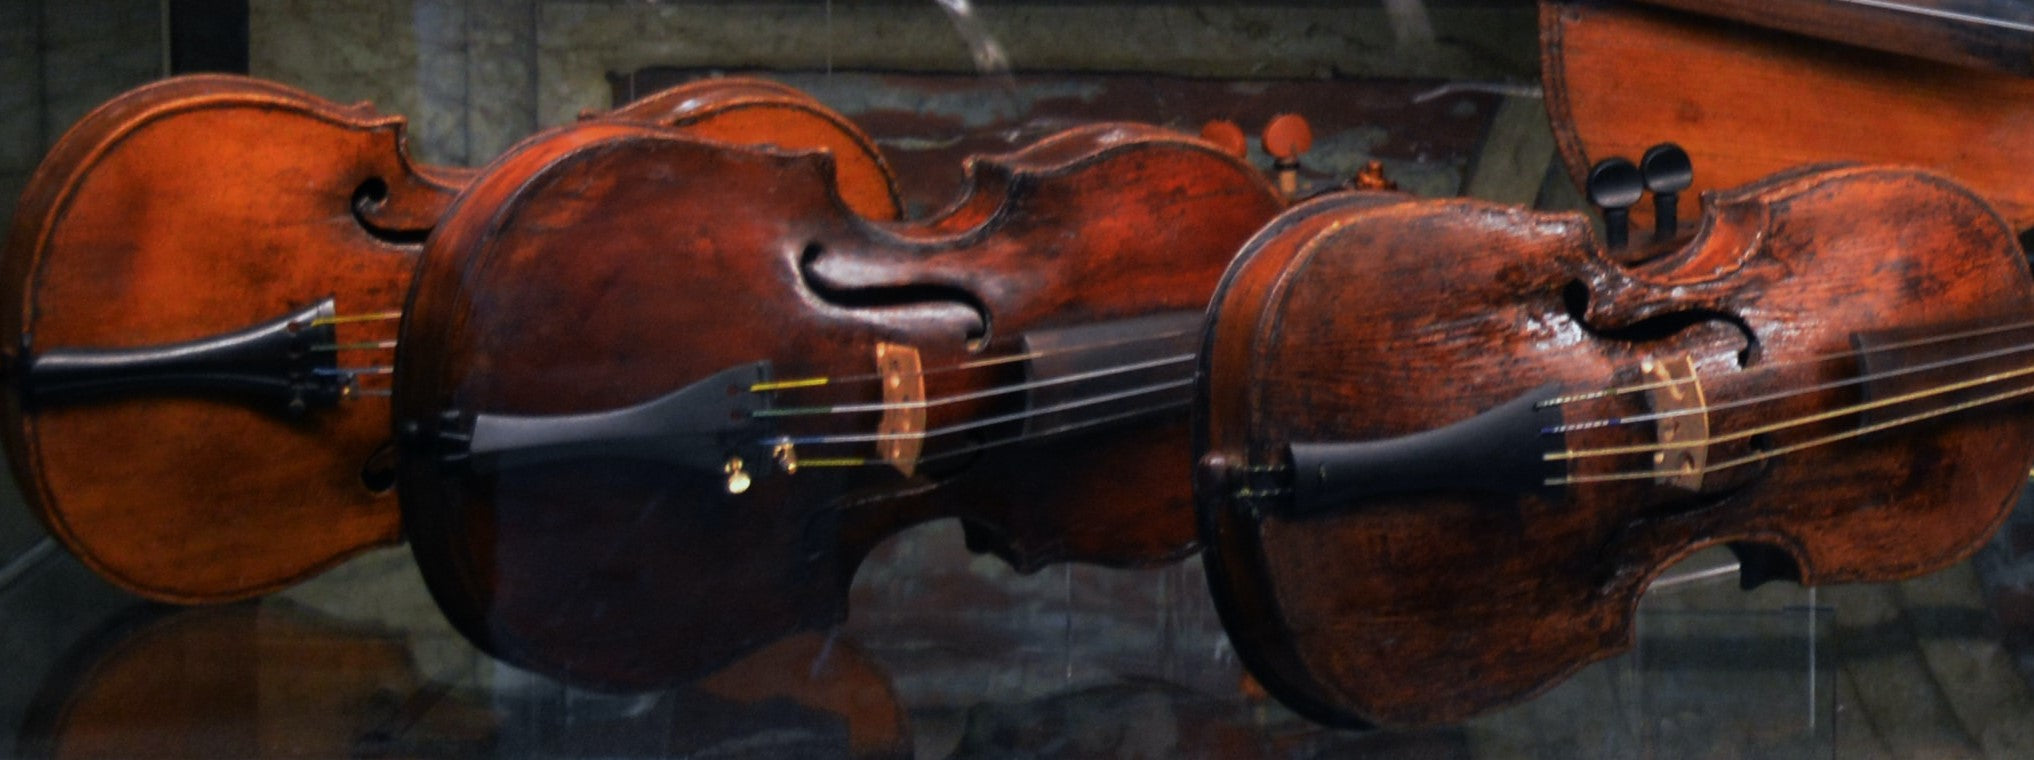 Antique and Professional Violins